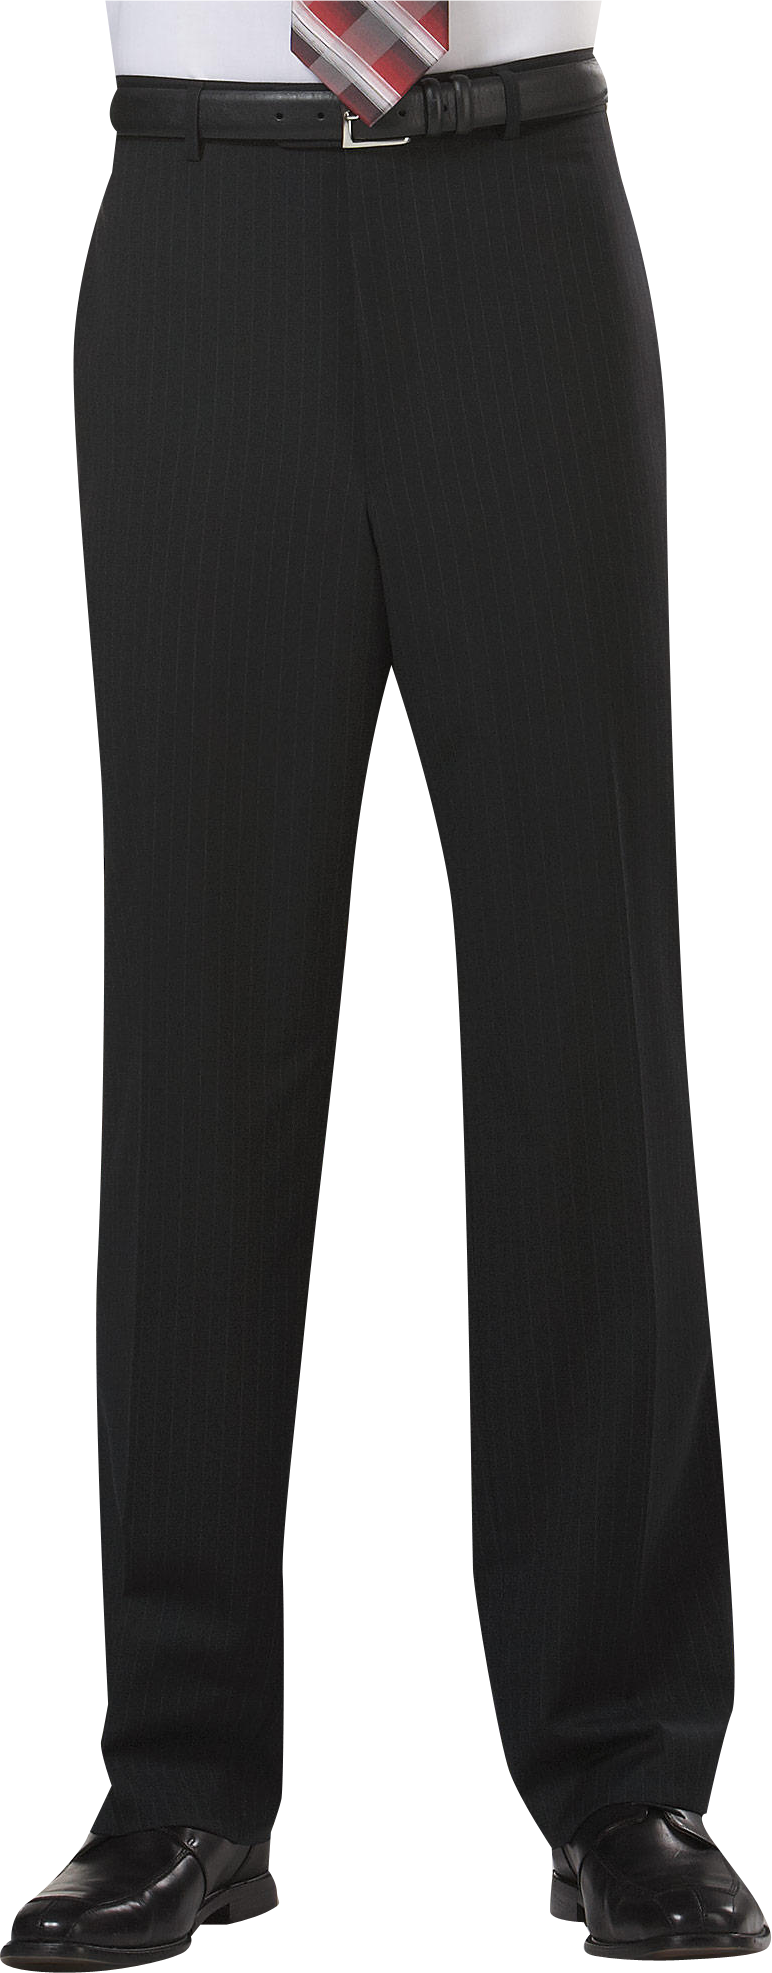 Pronto Uomo Platinum Suit Separates Modern Fit Dress Pants, Black ...